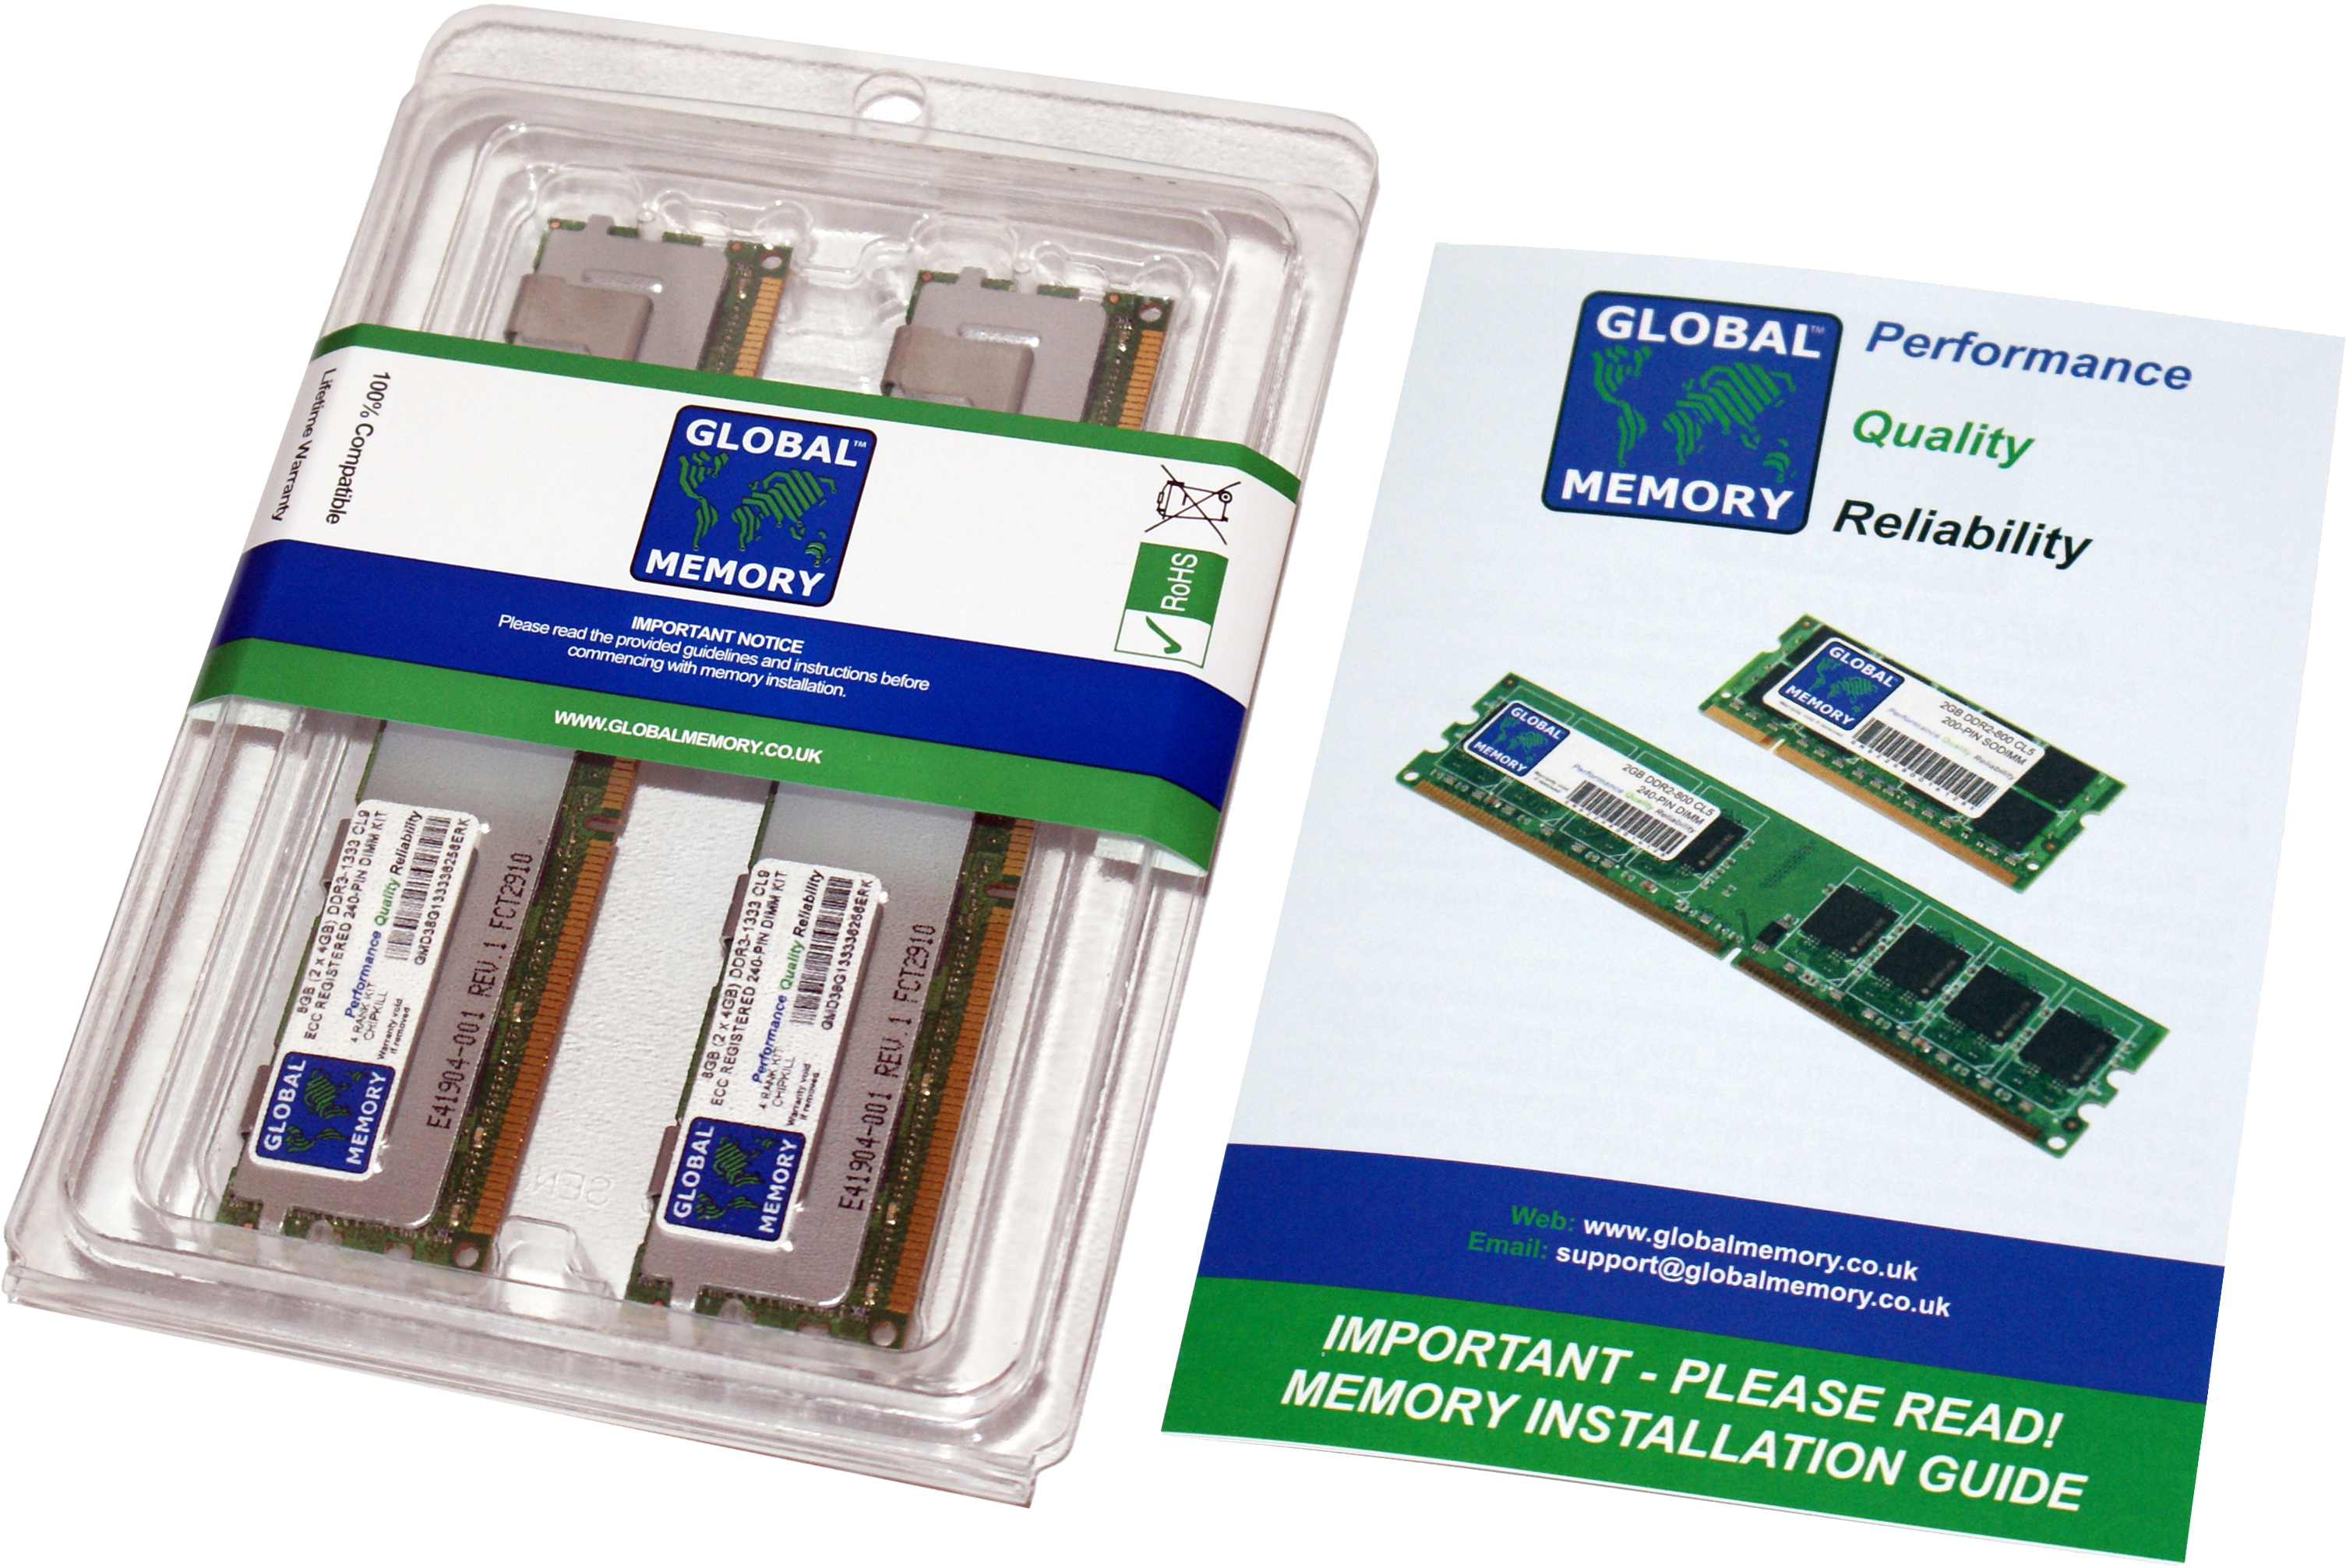 32GB (2 x 16GB) DDR3 1066/1333MHz 240-PIN ECC REGISTERED DIMM (RDIMM) MEMORY RAM KIT FOR SUN SERVERS/WORKSTATIONS (8 RANK KIT NON-CHIPKILL)